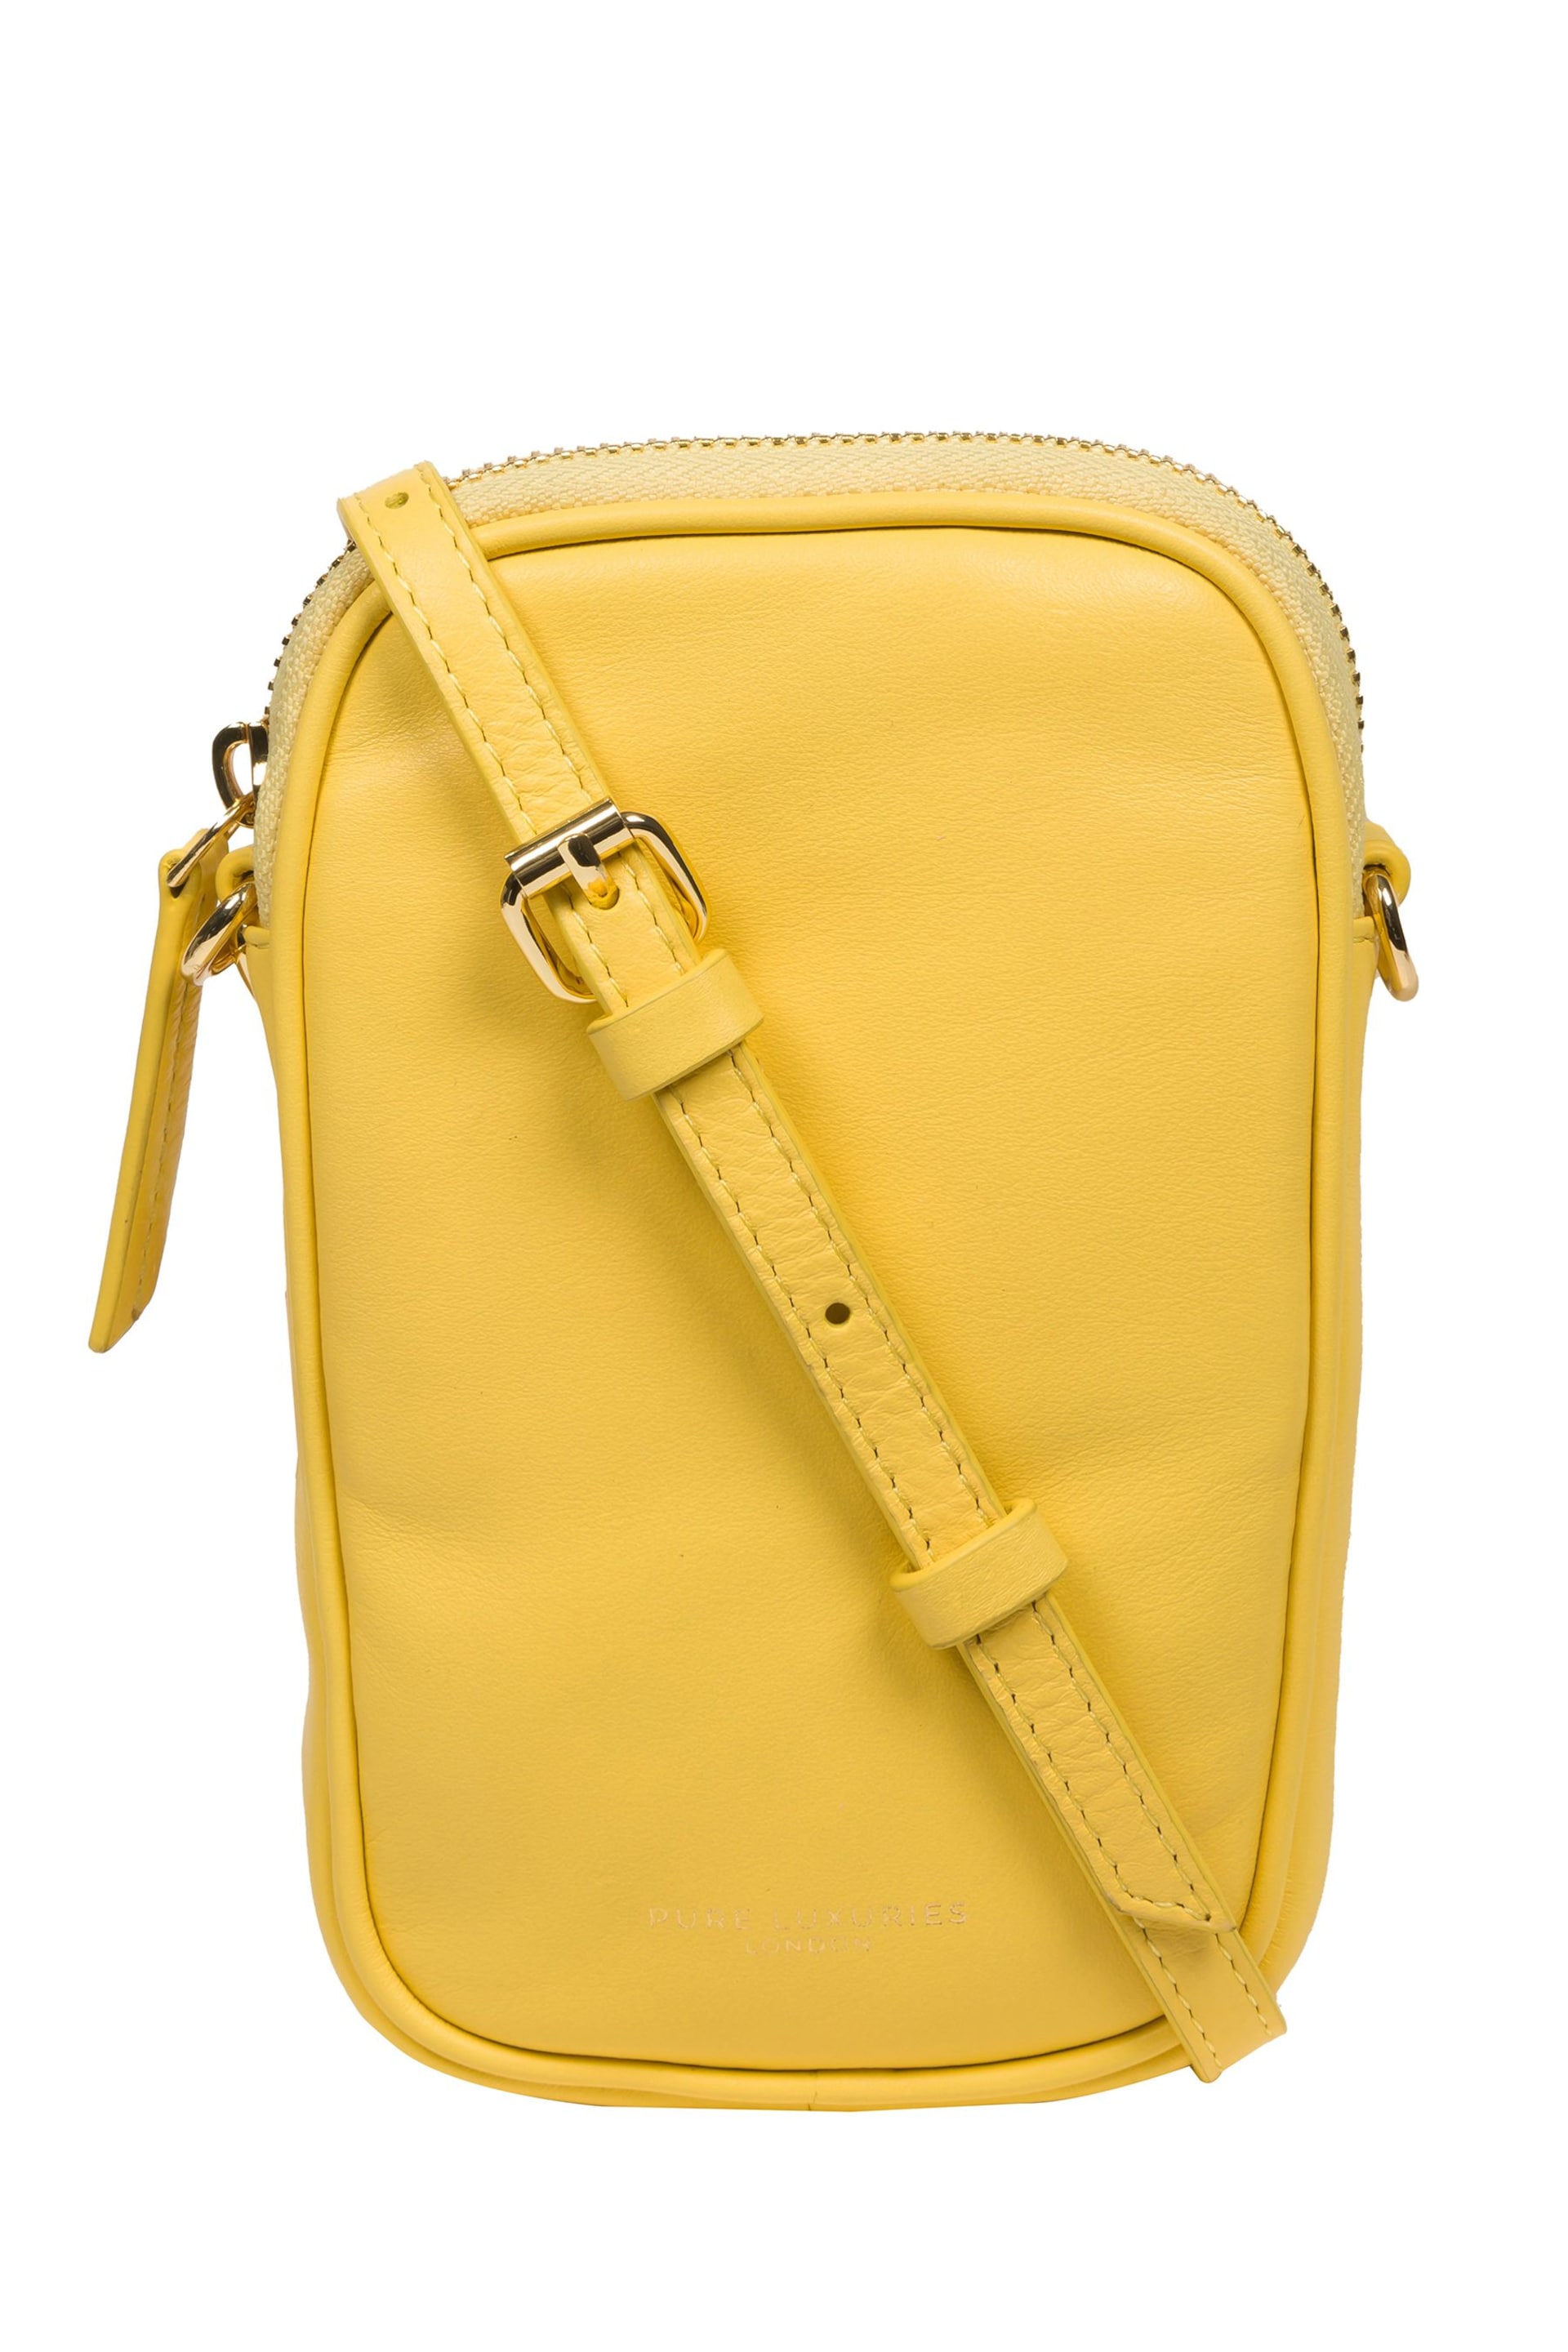 Pure Luxuries London Alaina Nappa Leather Cross-Body Phone Bag - Image 1 of 8